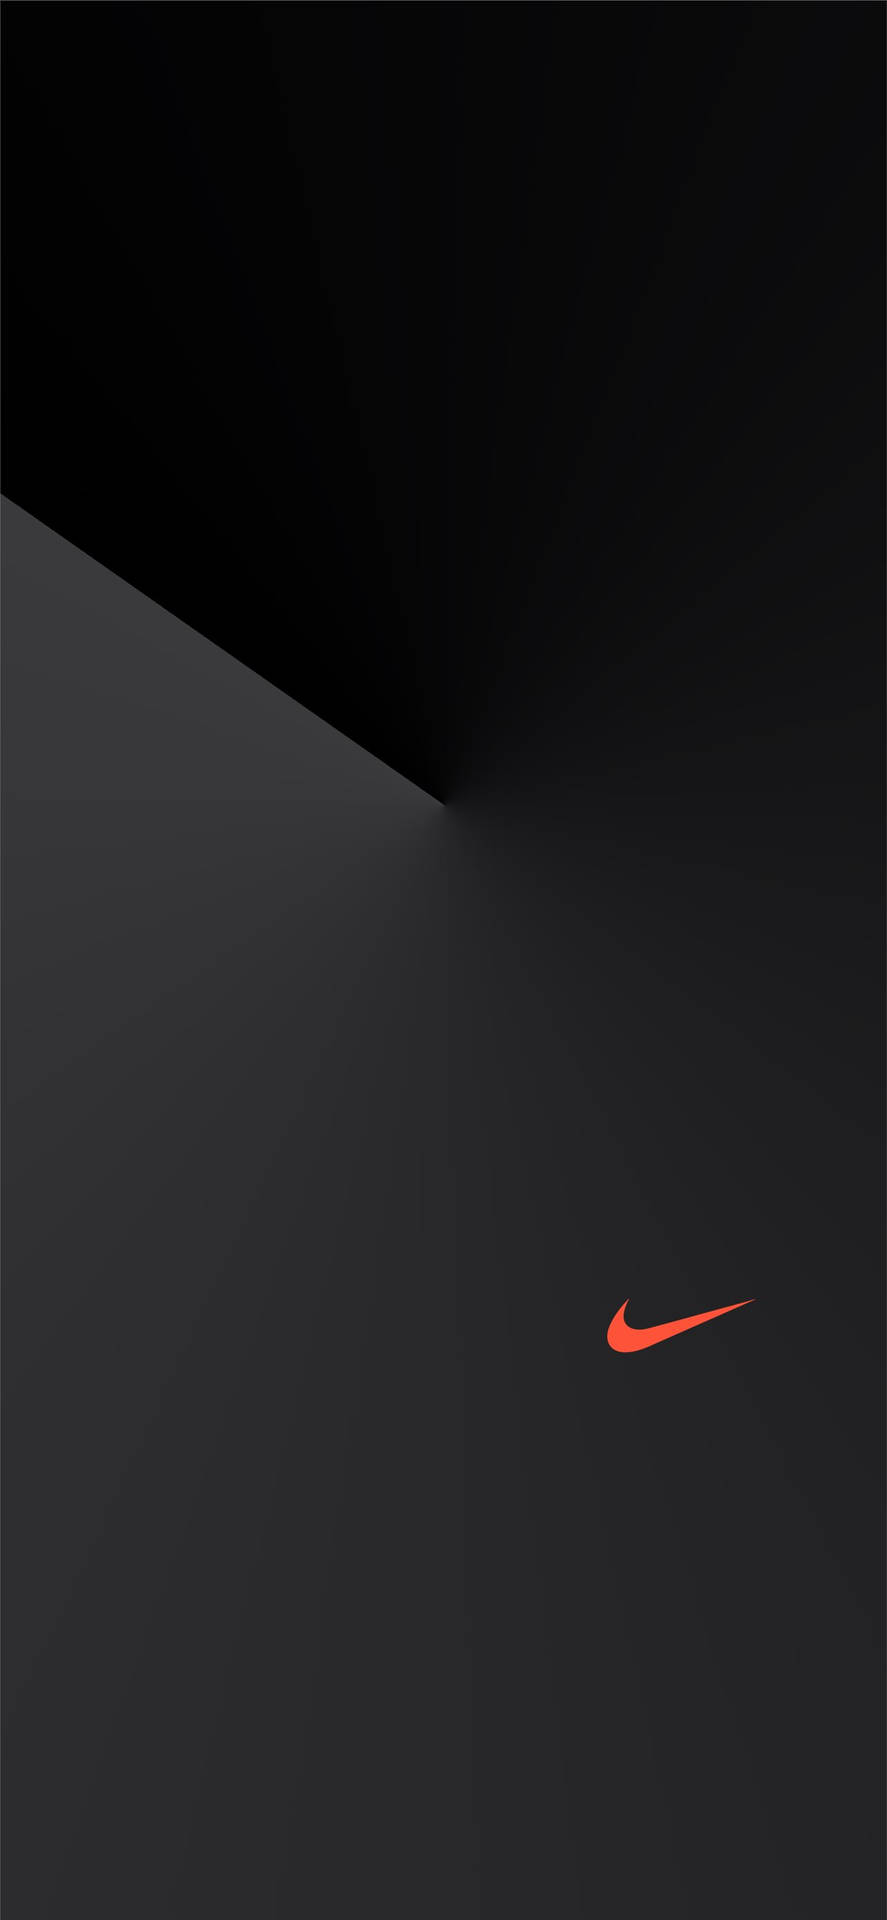 Lille Nike Iphone-logo Wallpaper